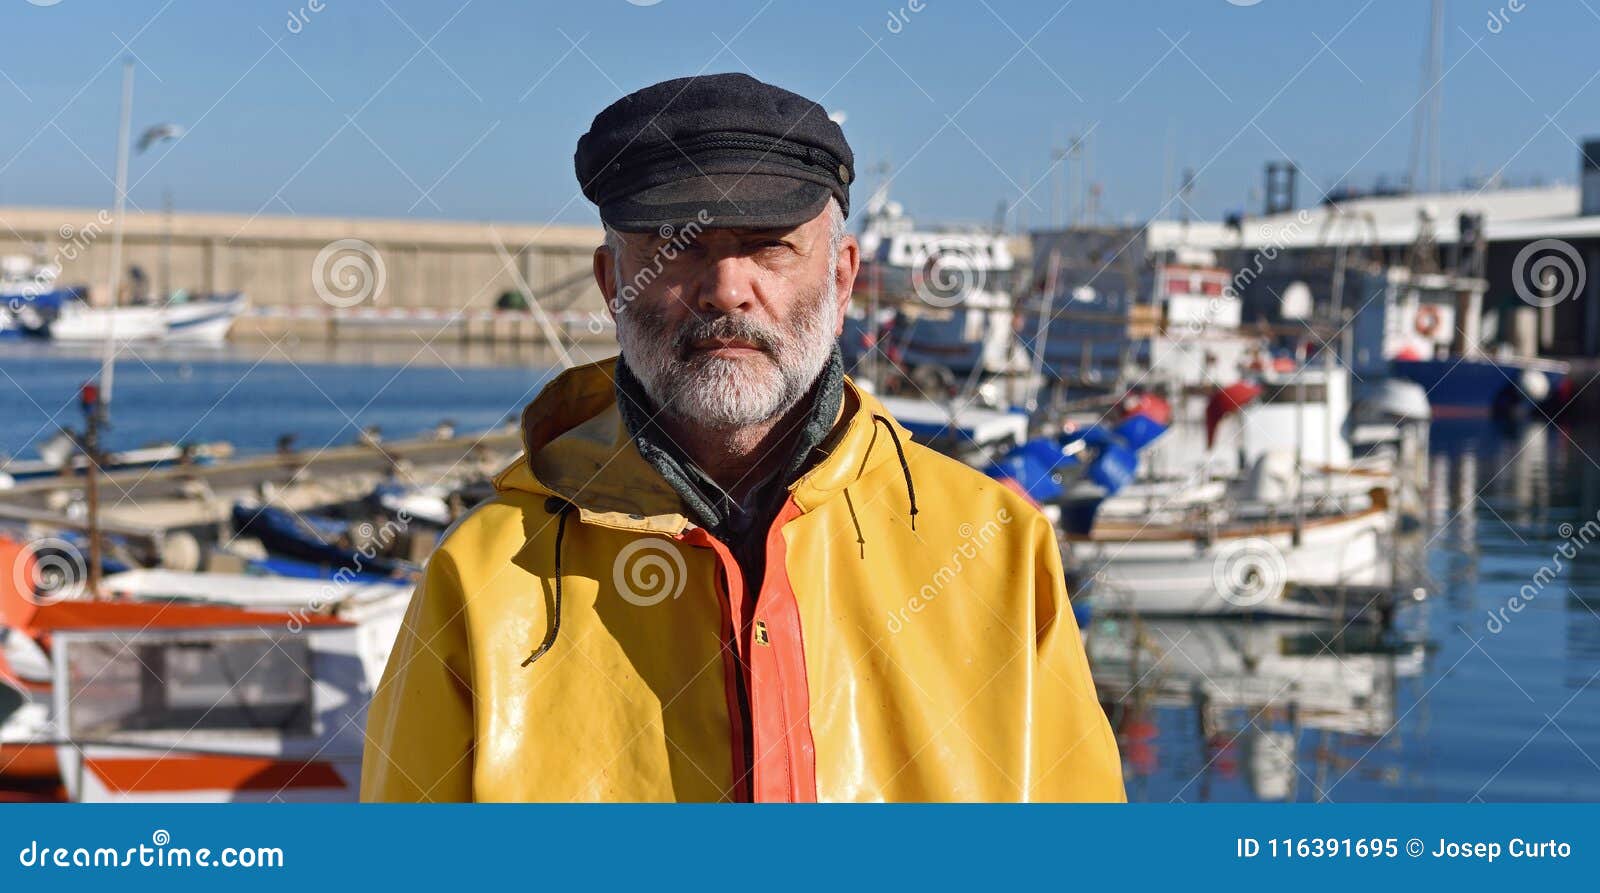 portrait of a fisherman